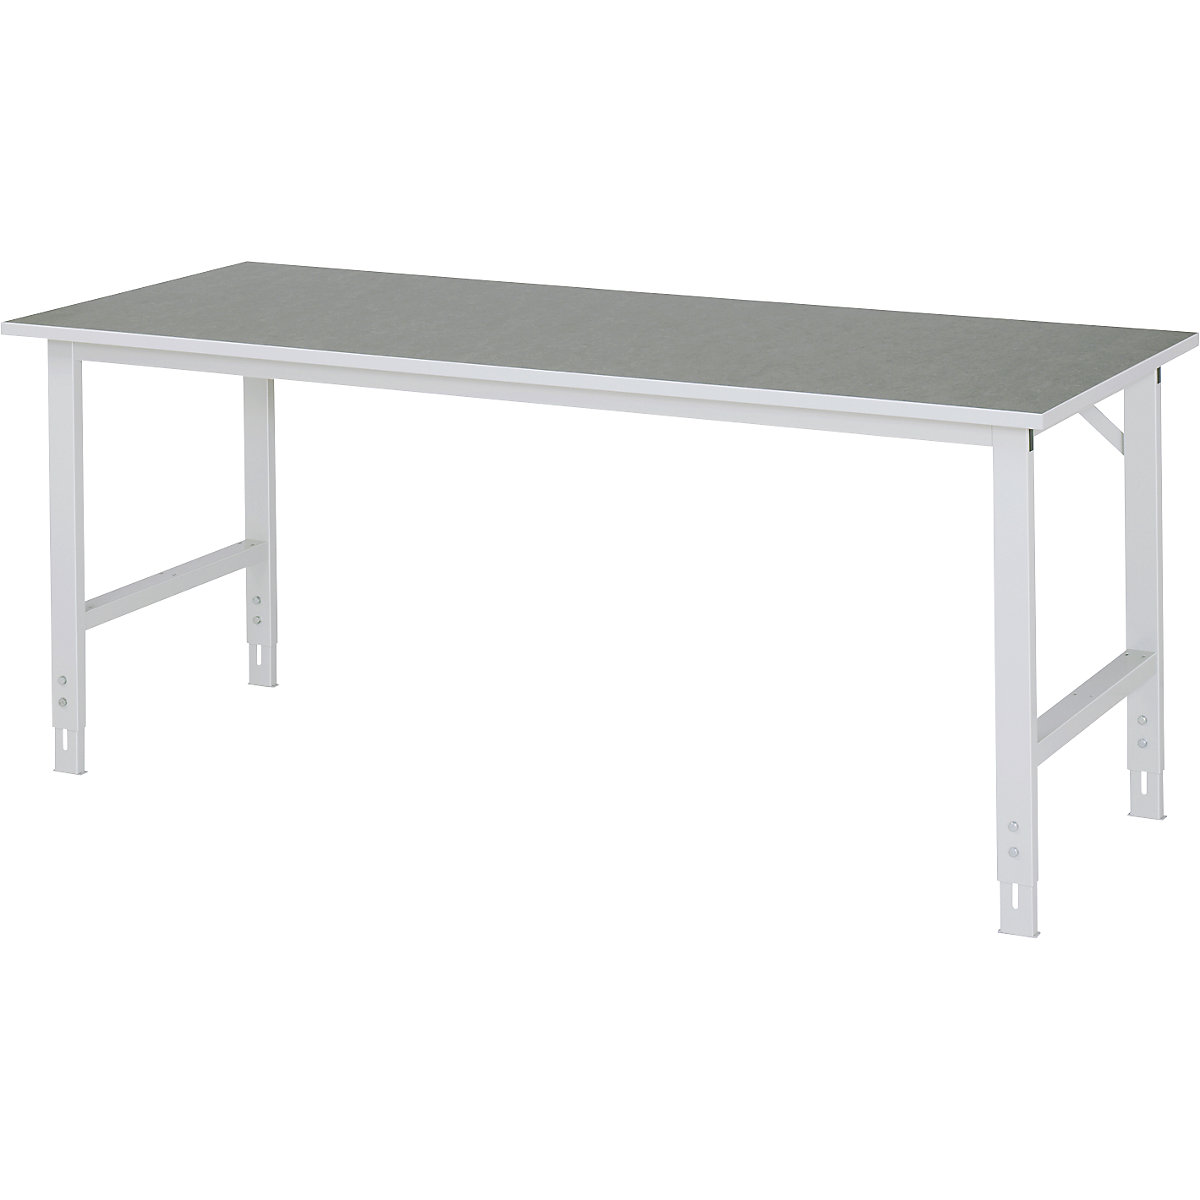 Werktafel, in hoogte verstelbaar – RAU, 760 – 1080 mm, linoleum blad, b x d = 2000 x 800 mm, lichtgrijs-15